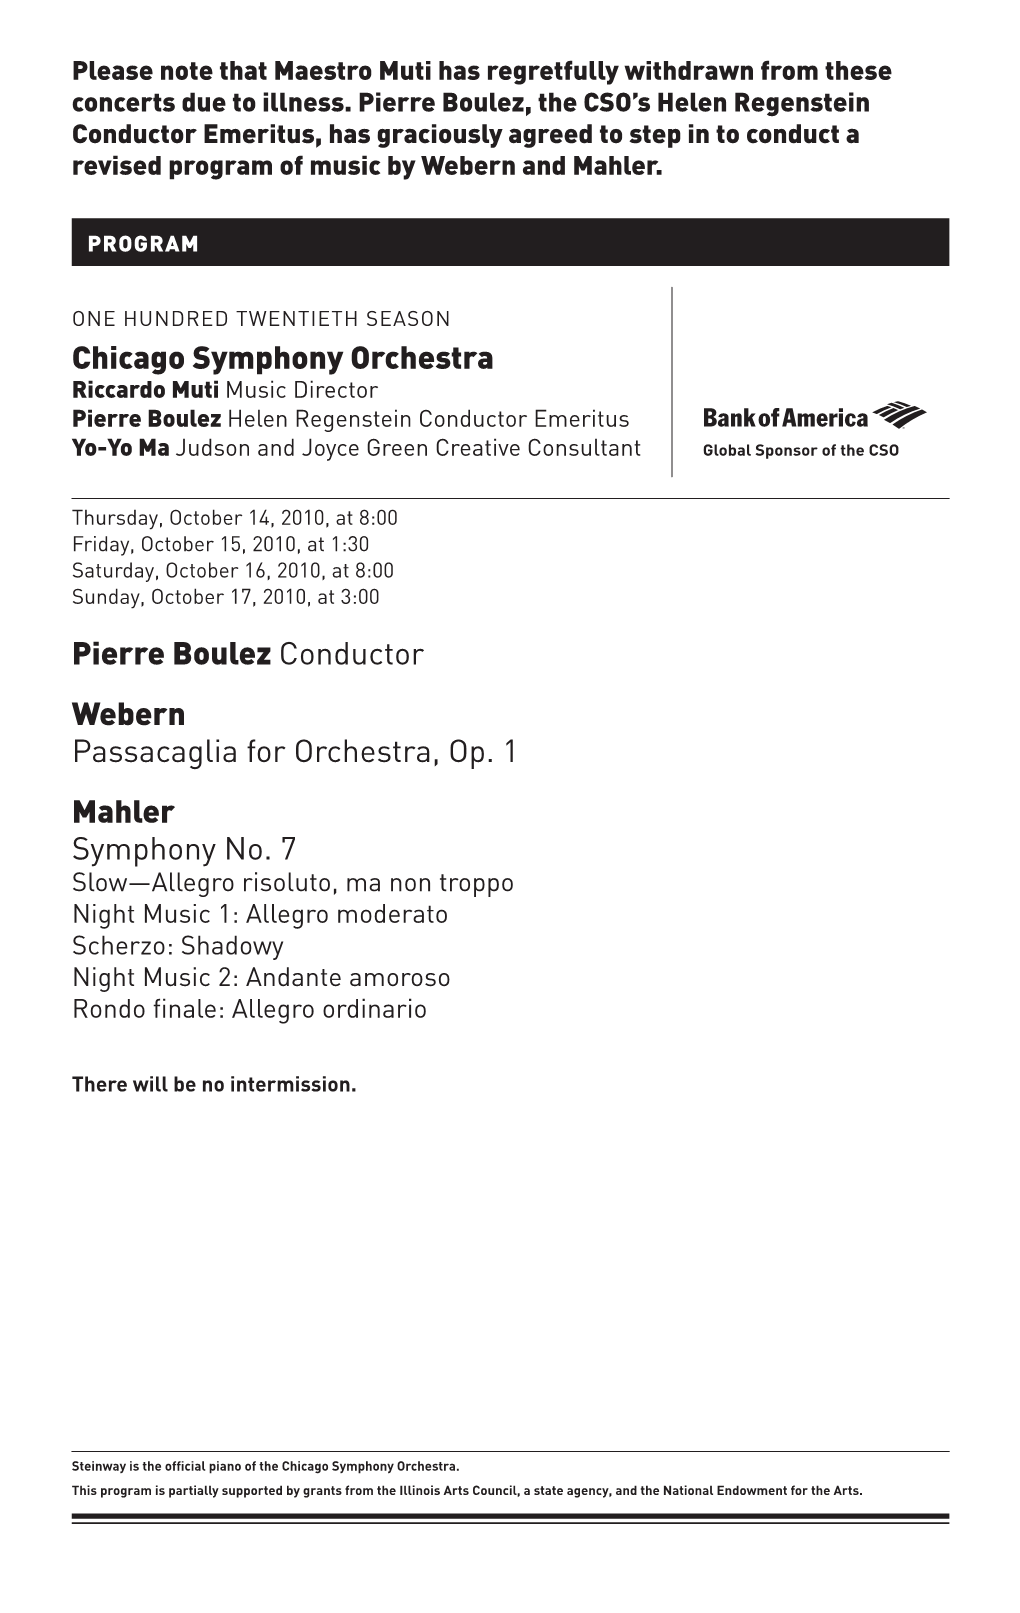 Pierre Boulez Conductor Webern Passacaglia for Orchestra, Op. 1 Mahler Symphony No